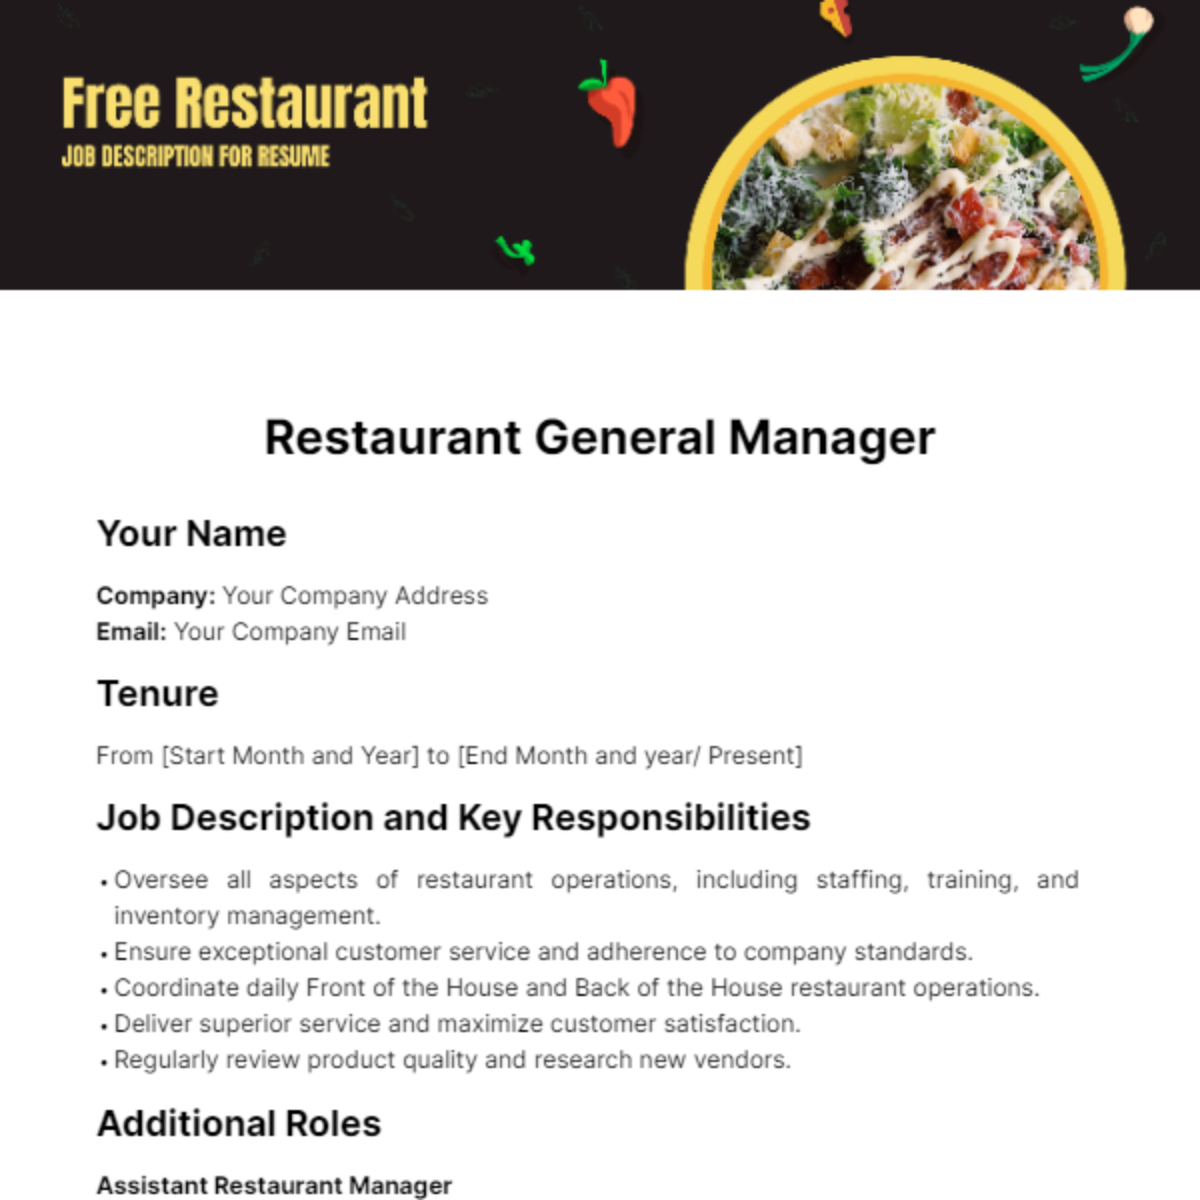 Restaurant Manager Job Description for Resume Template